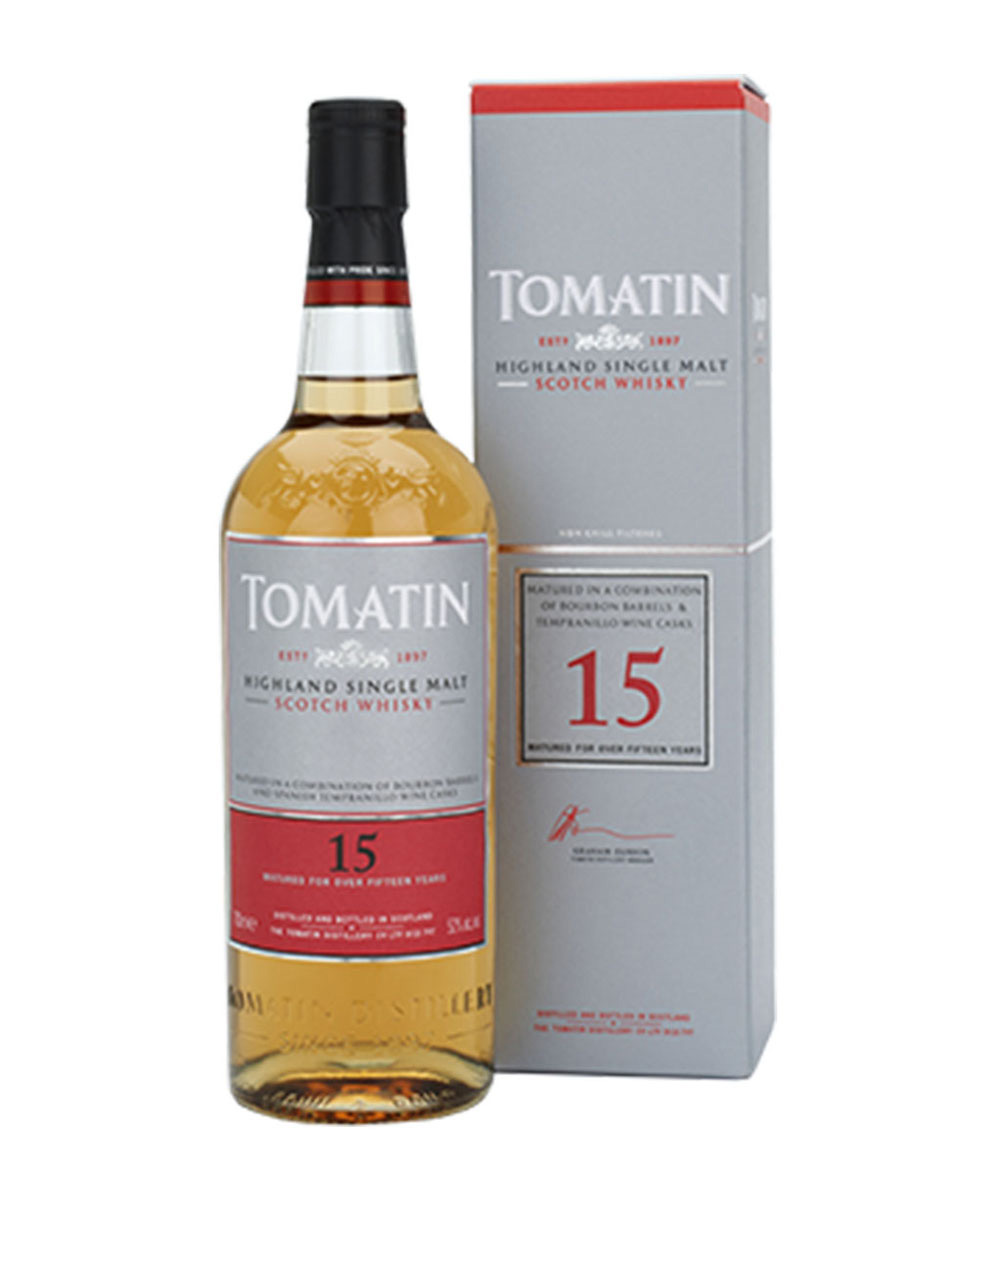 Tomatin 15 Year Old Limited Edition Single Malt Scotch Whisky